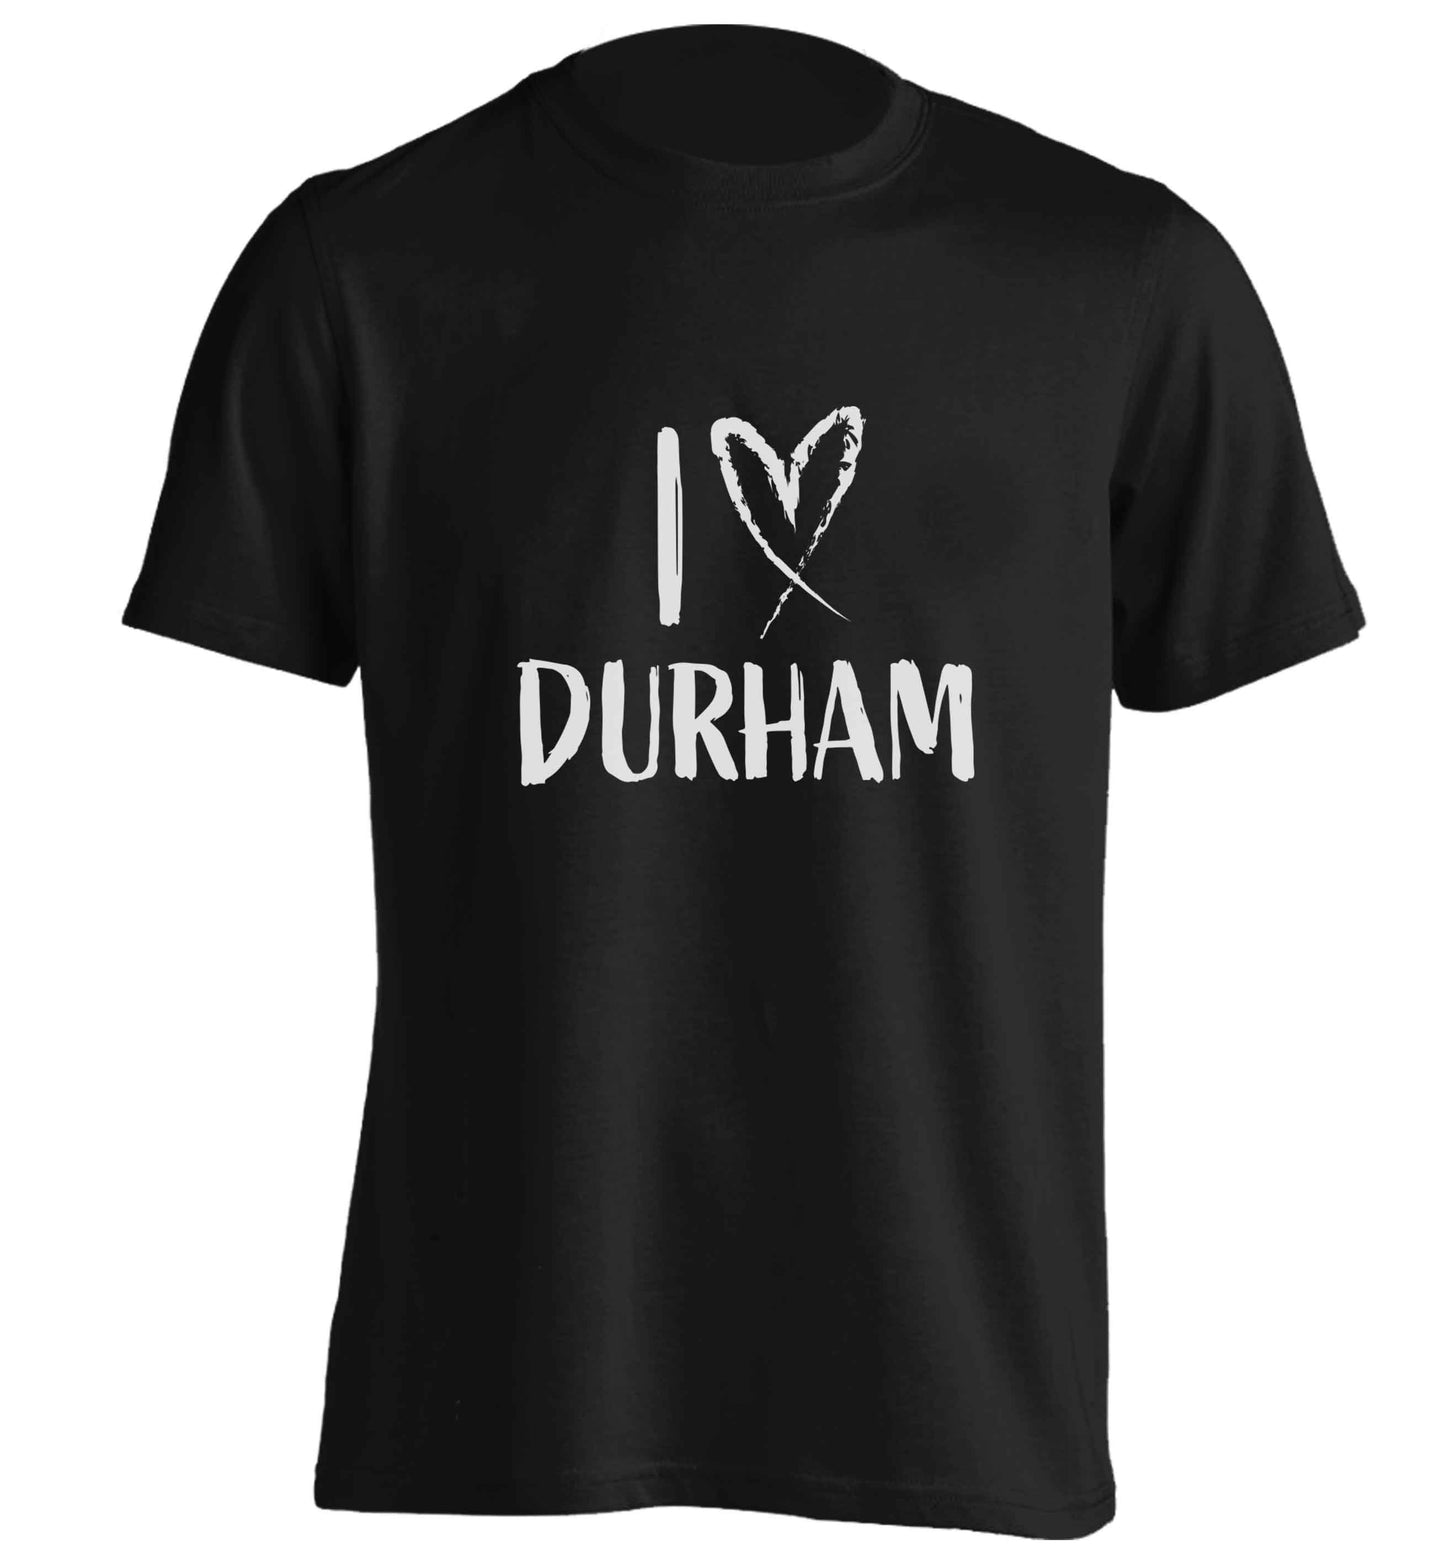 I love Durham adults unisex black Tshirt 2XL